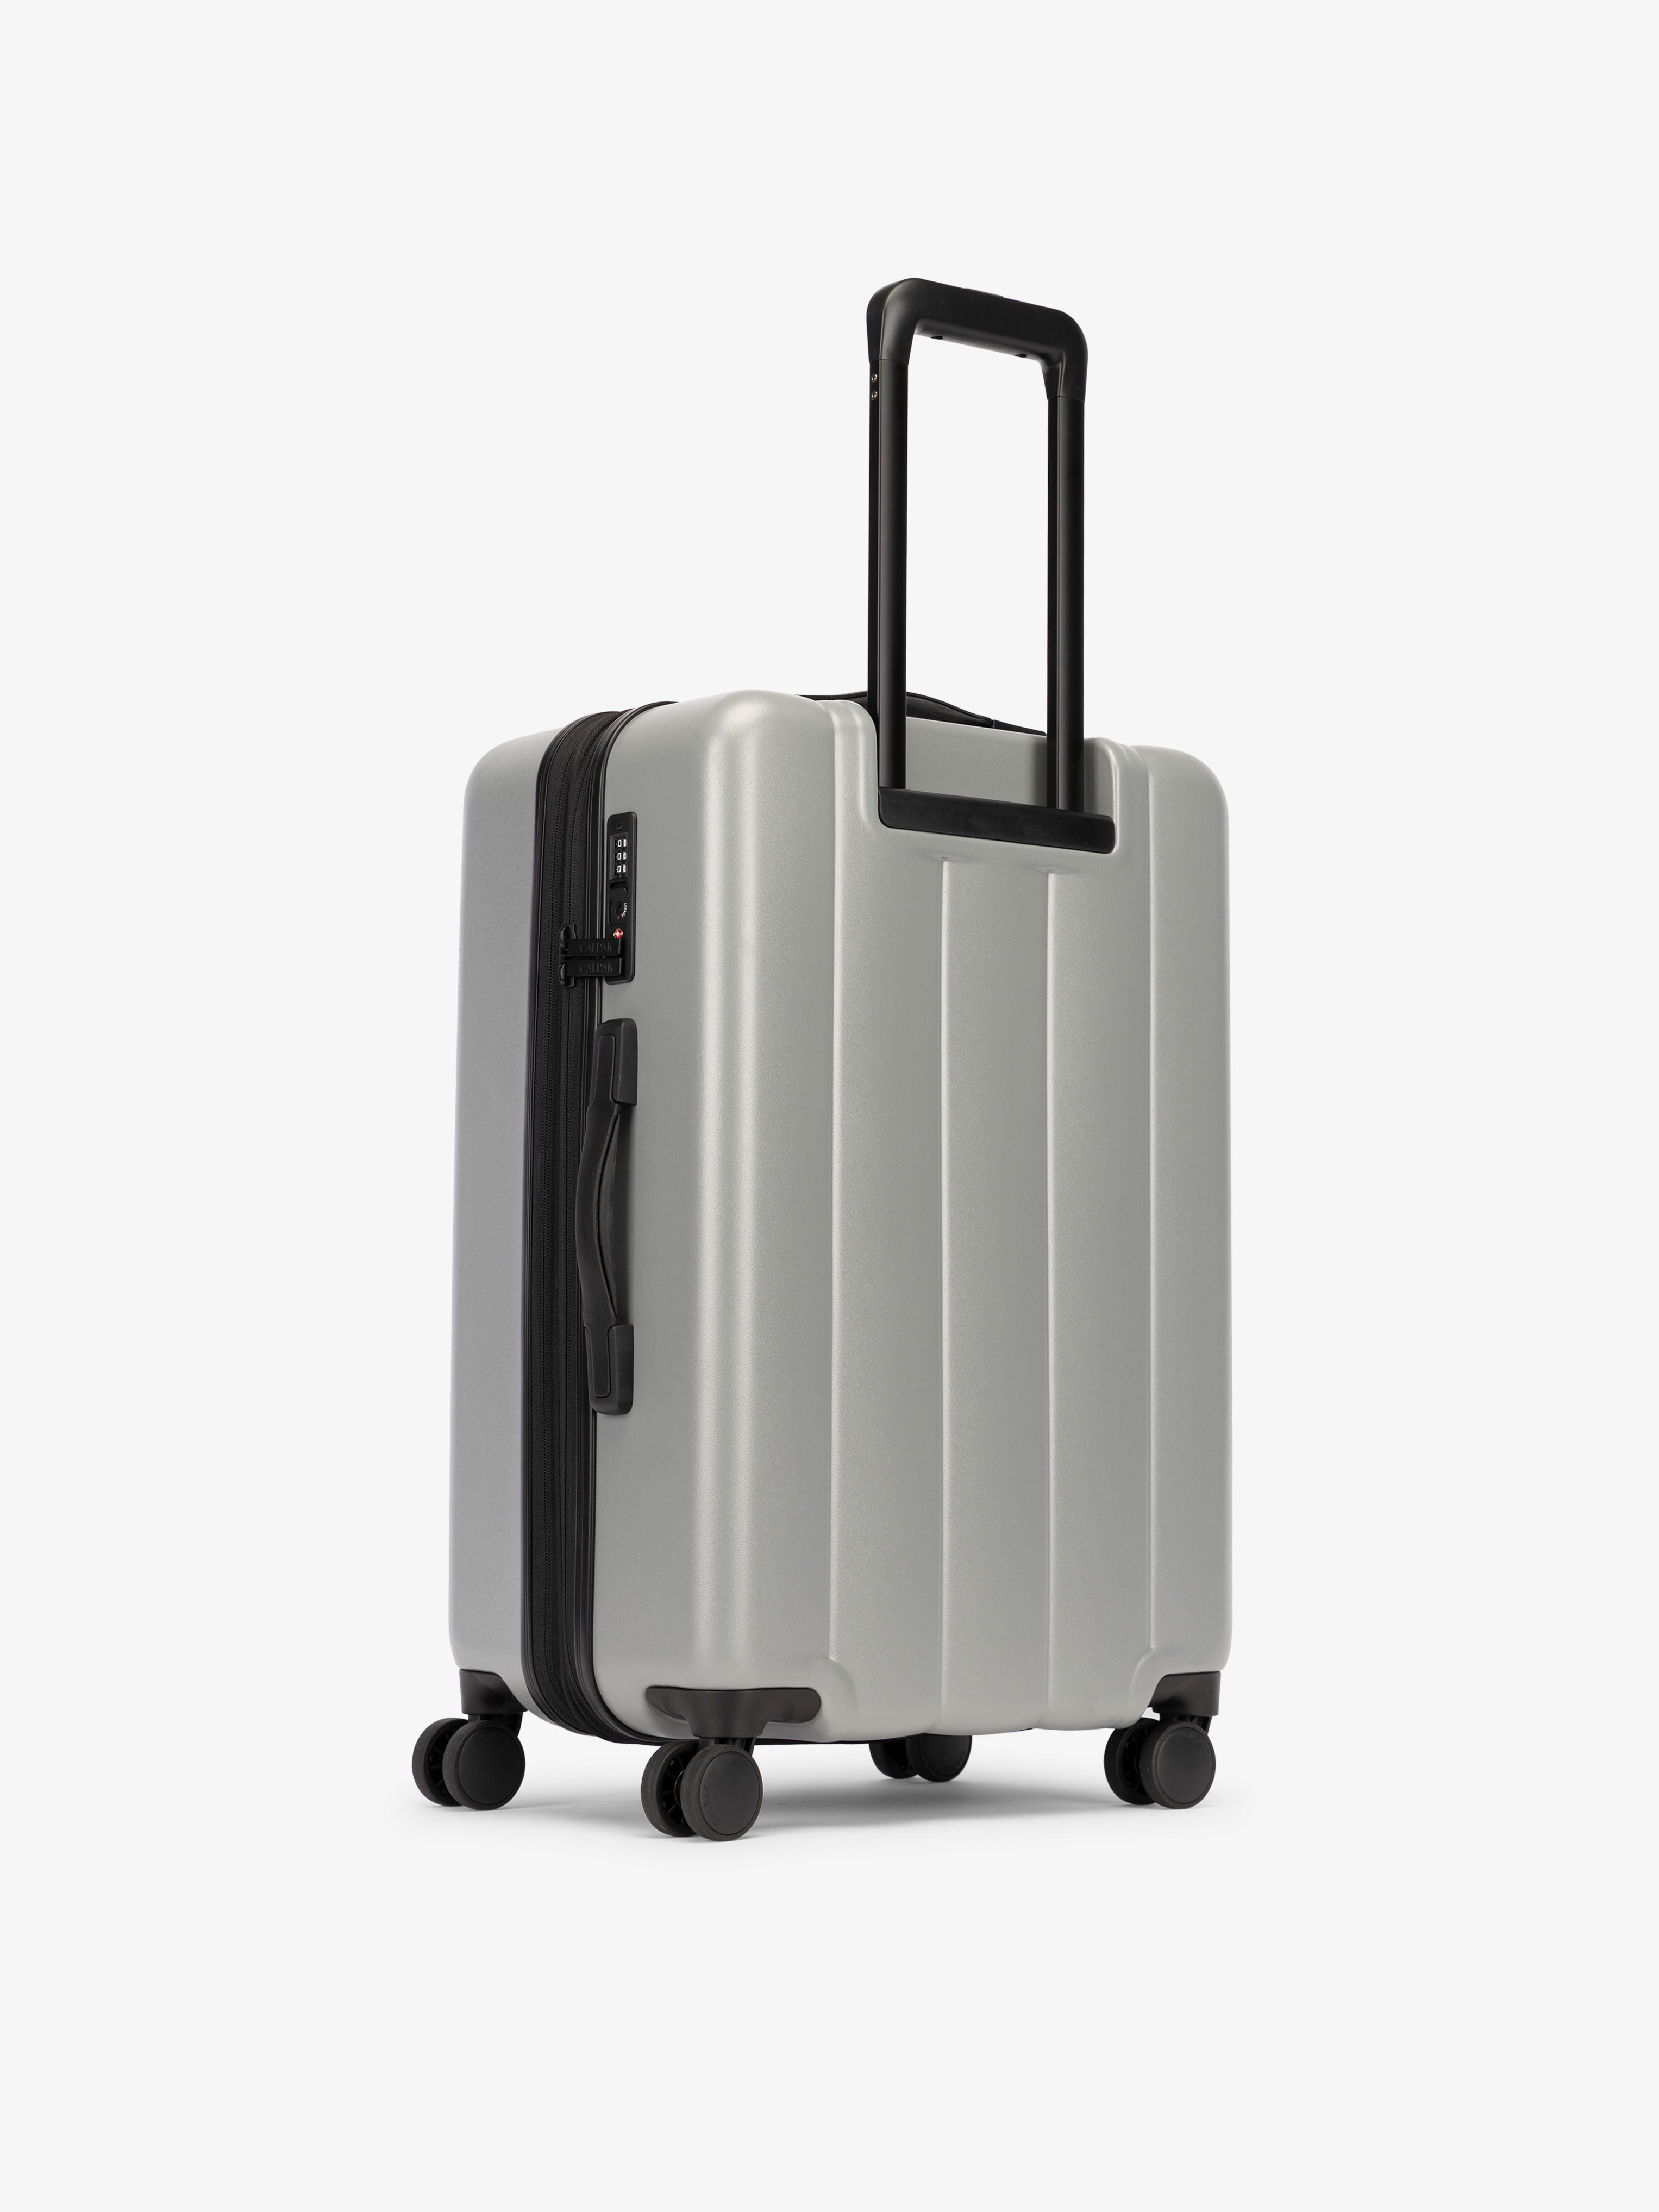 CALPAK medium luggage featuring dual spinner wheels and bottom grab handle in gray